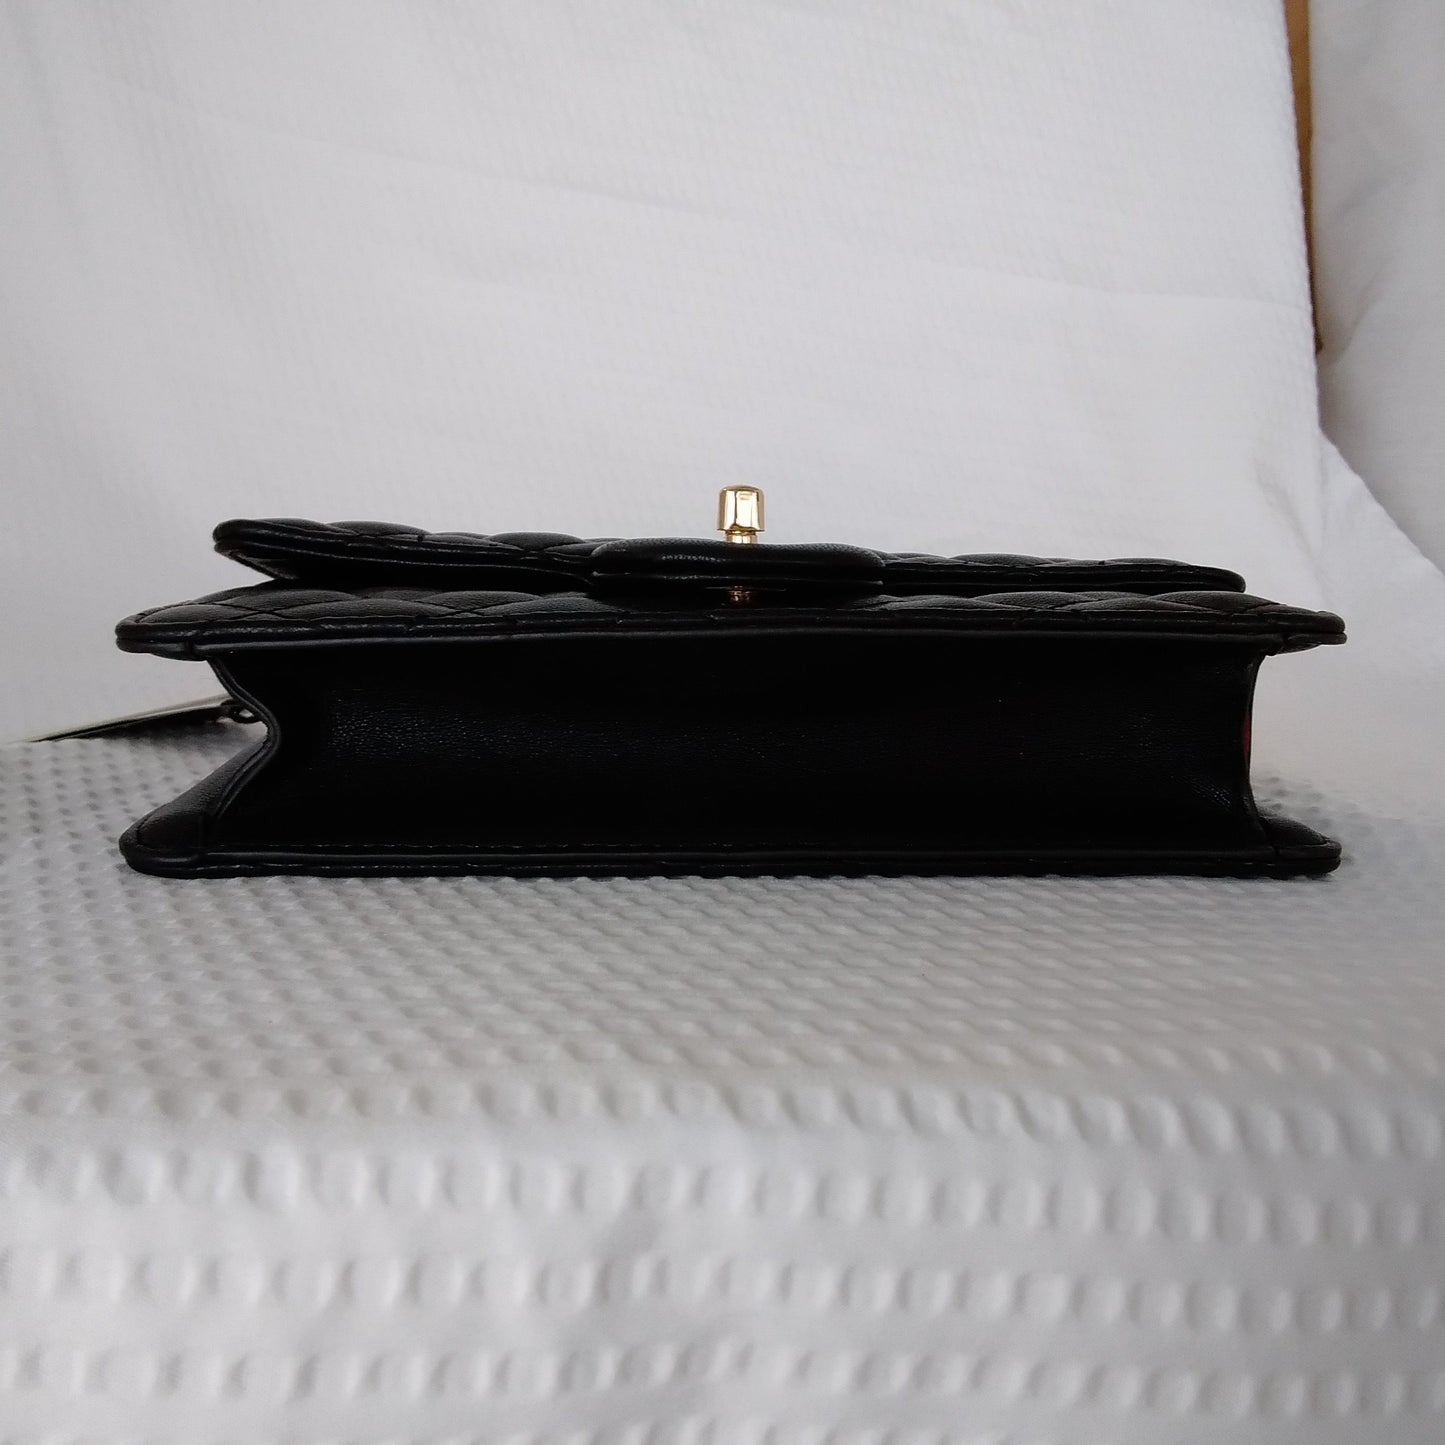 Classic Fashion - Black Quilt Design Shoulder Bag - NWT